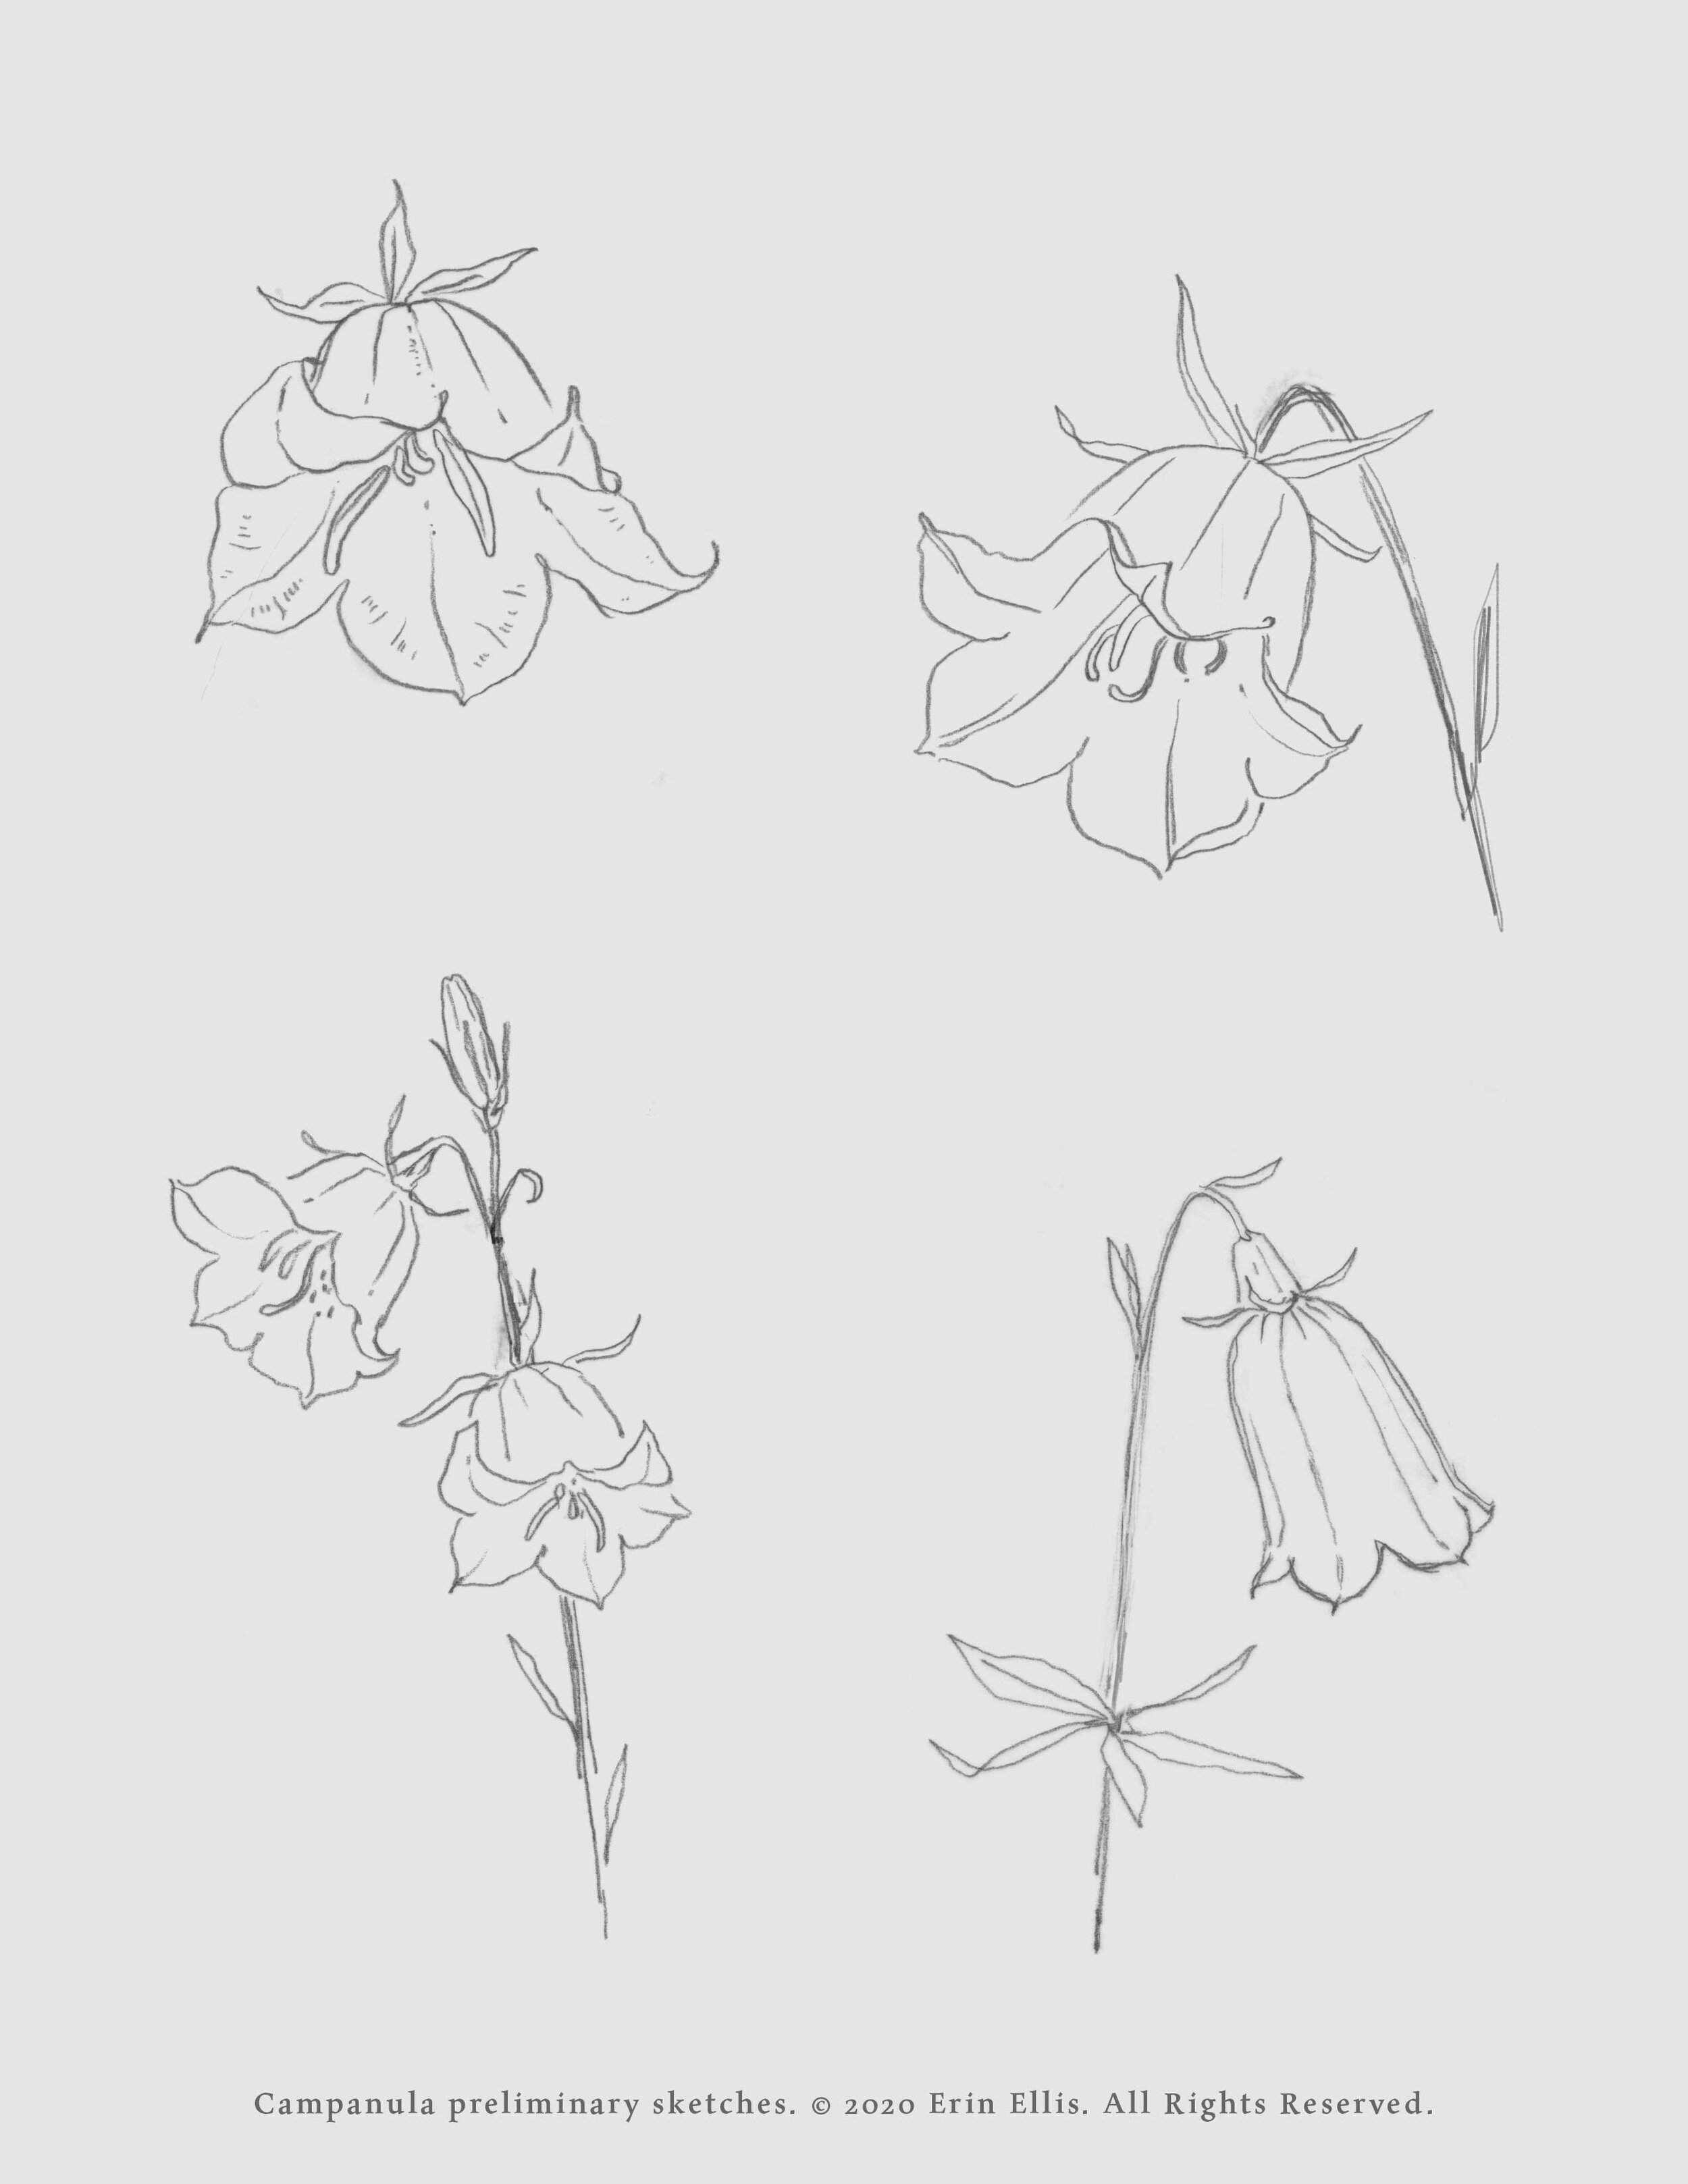 ellis-bellflower-lactation-campanula-sketches.jpg